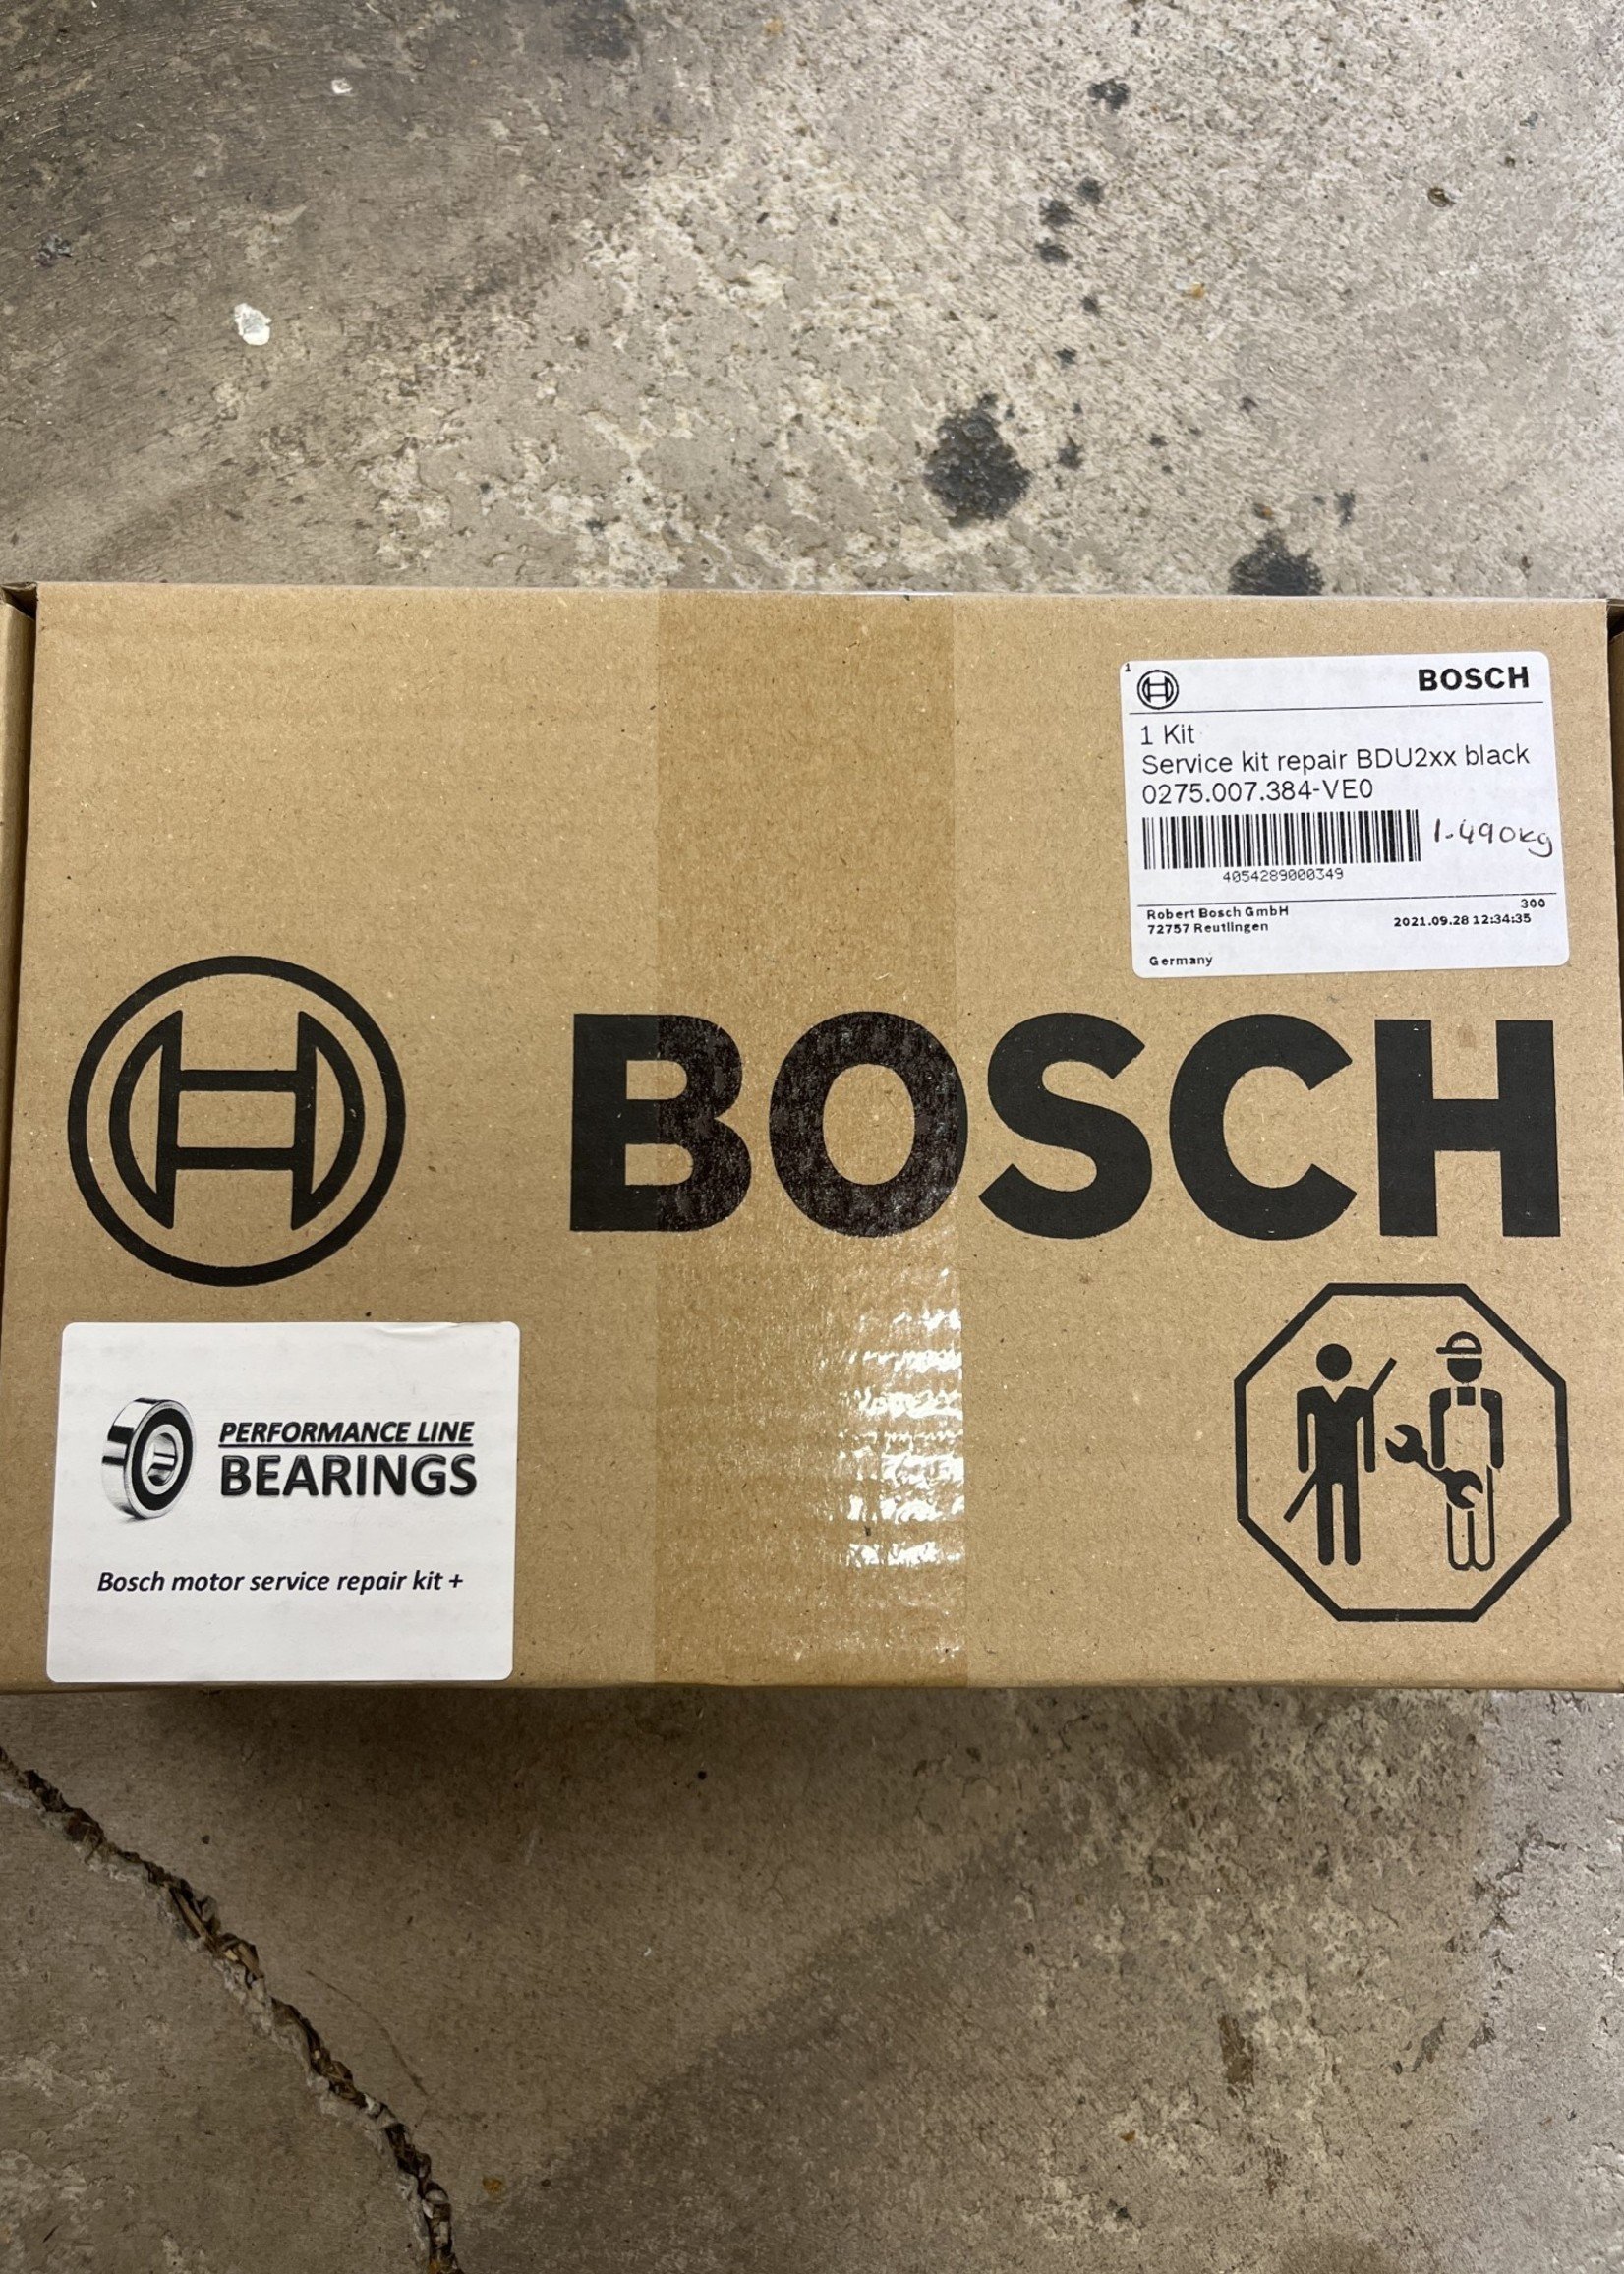 Performance line bearings Bosch motor service repair kit +